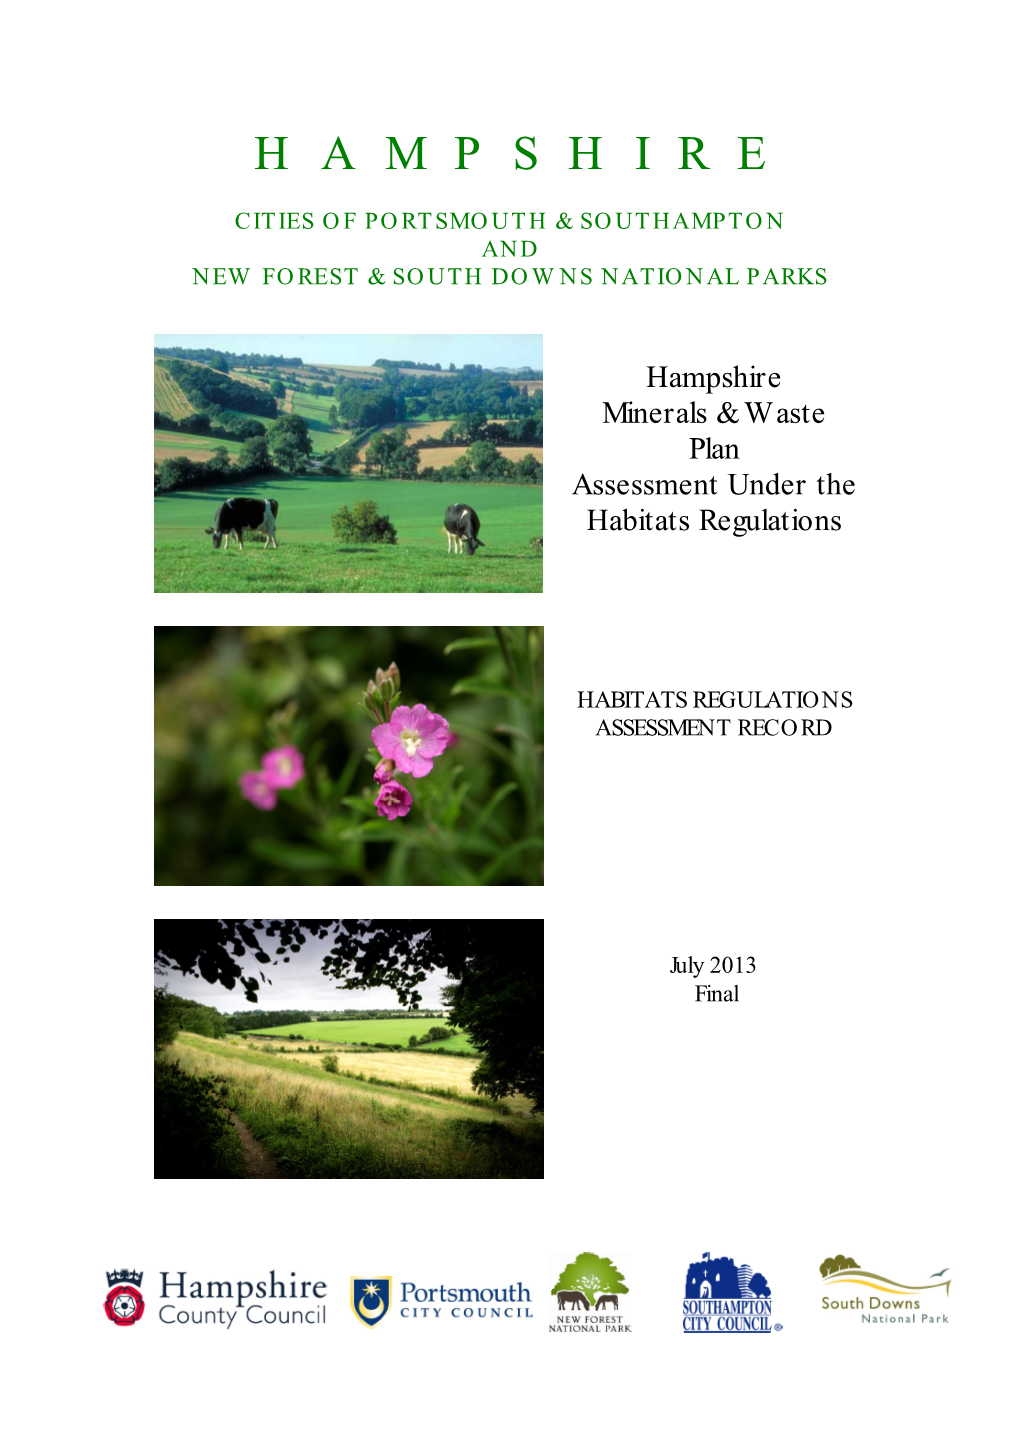 Habitats Regulations Assessment Record Sept 2013